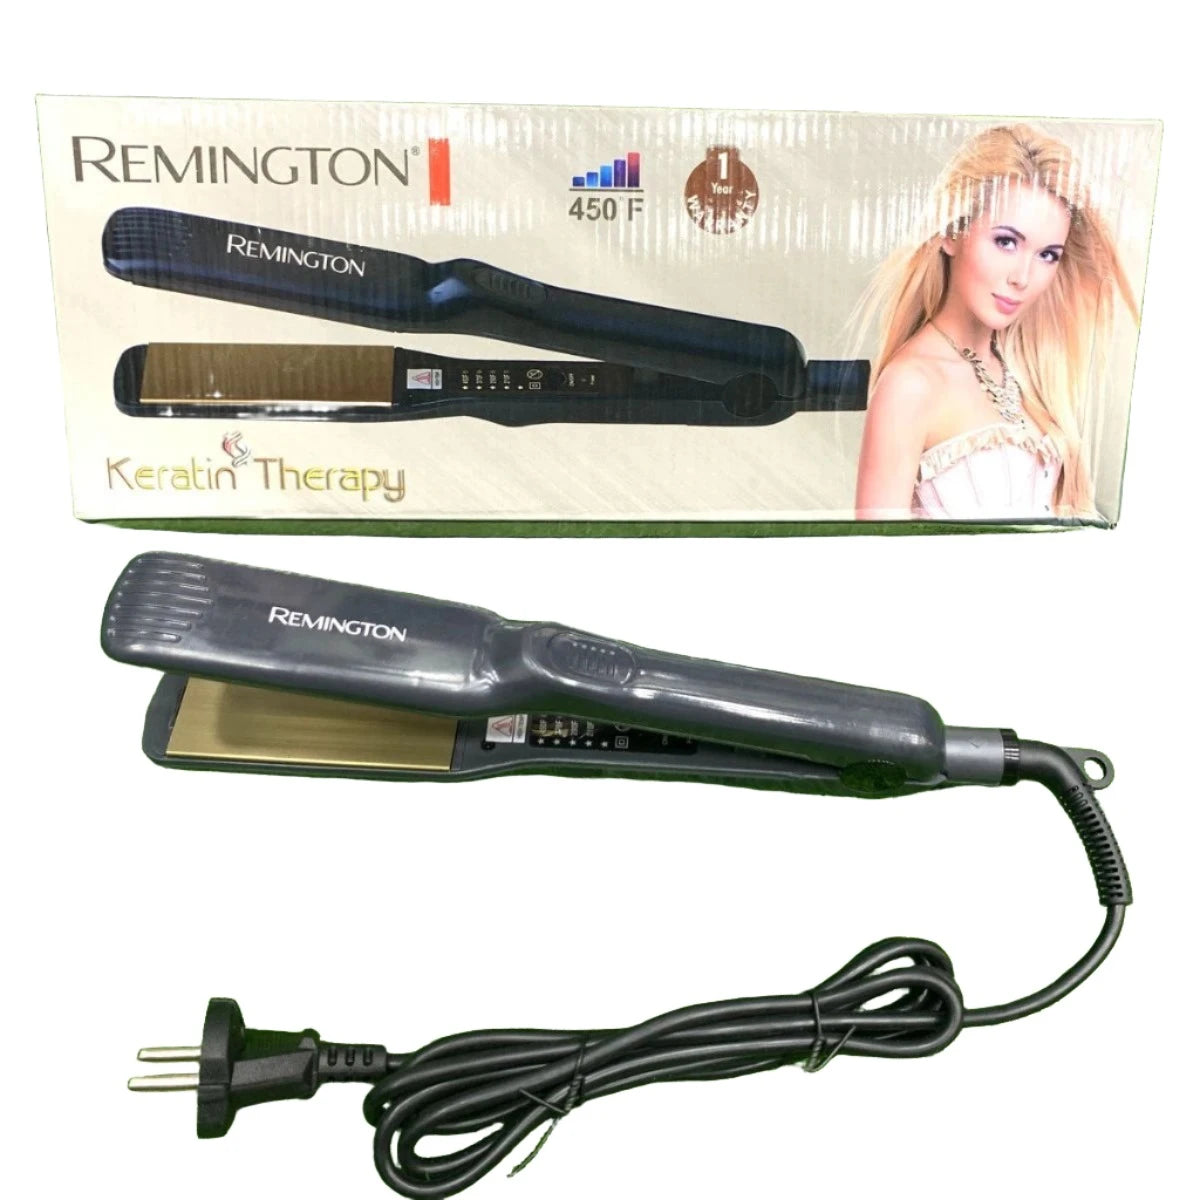 Remington Keratin Therapy Hair Straightner 450F